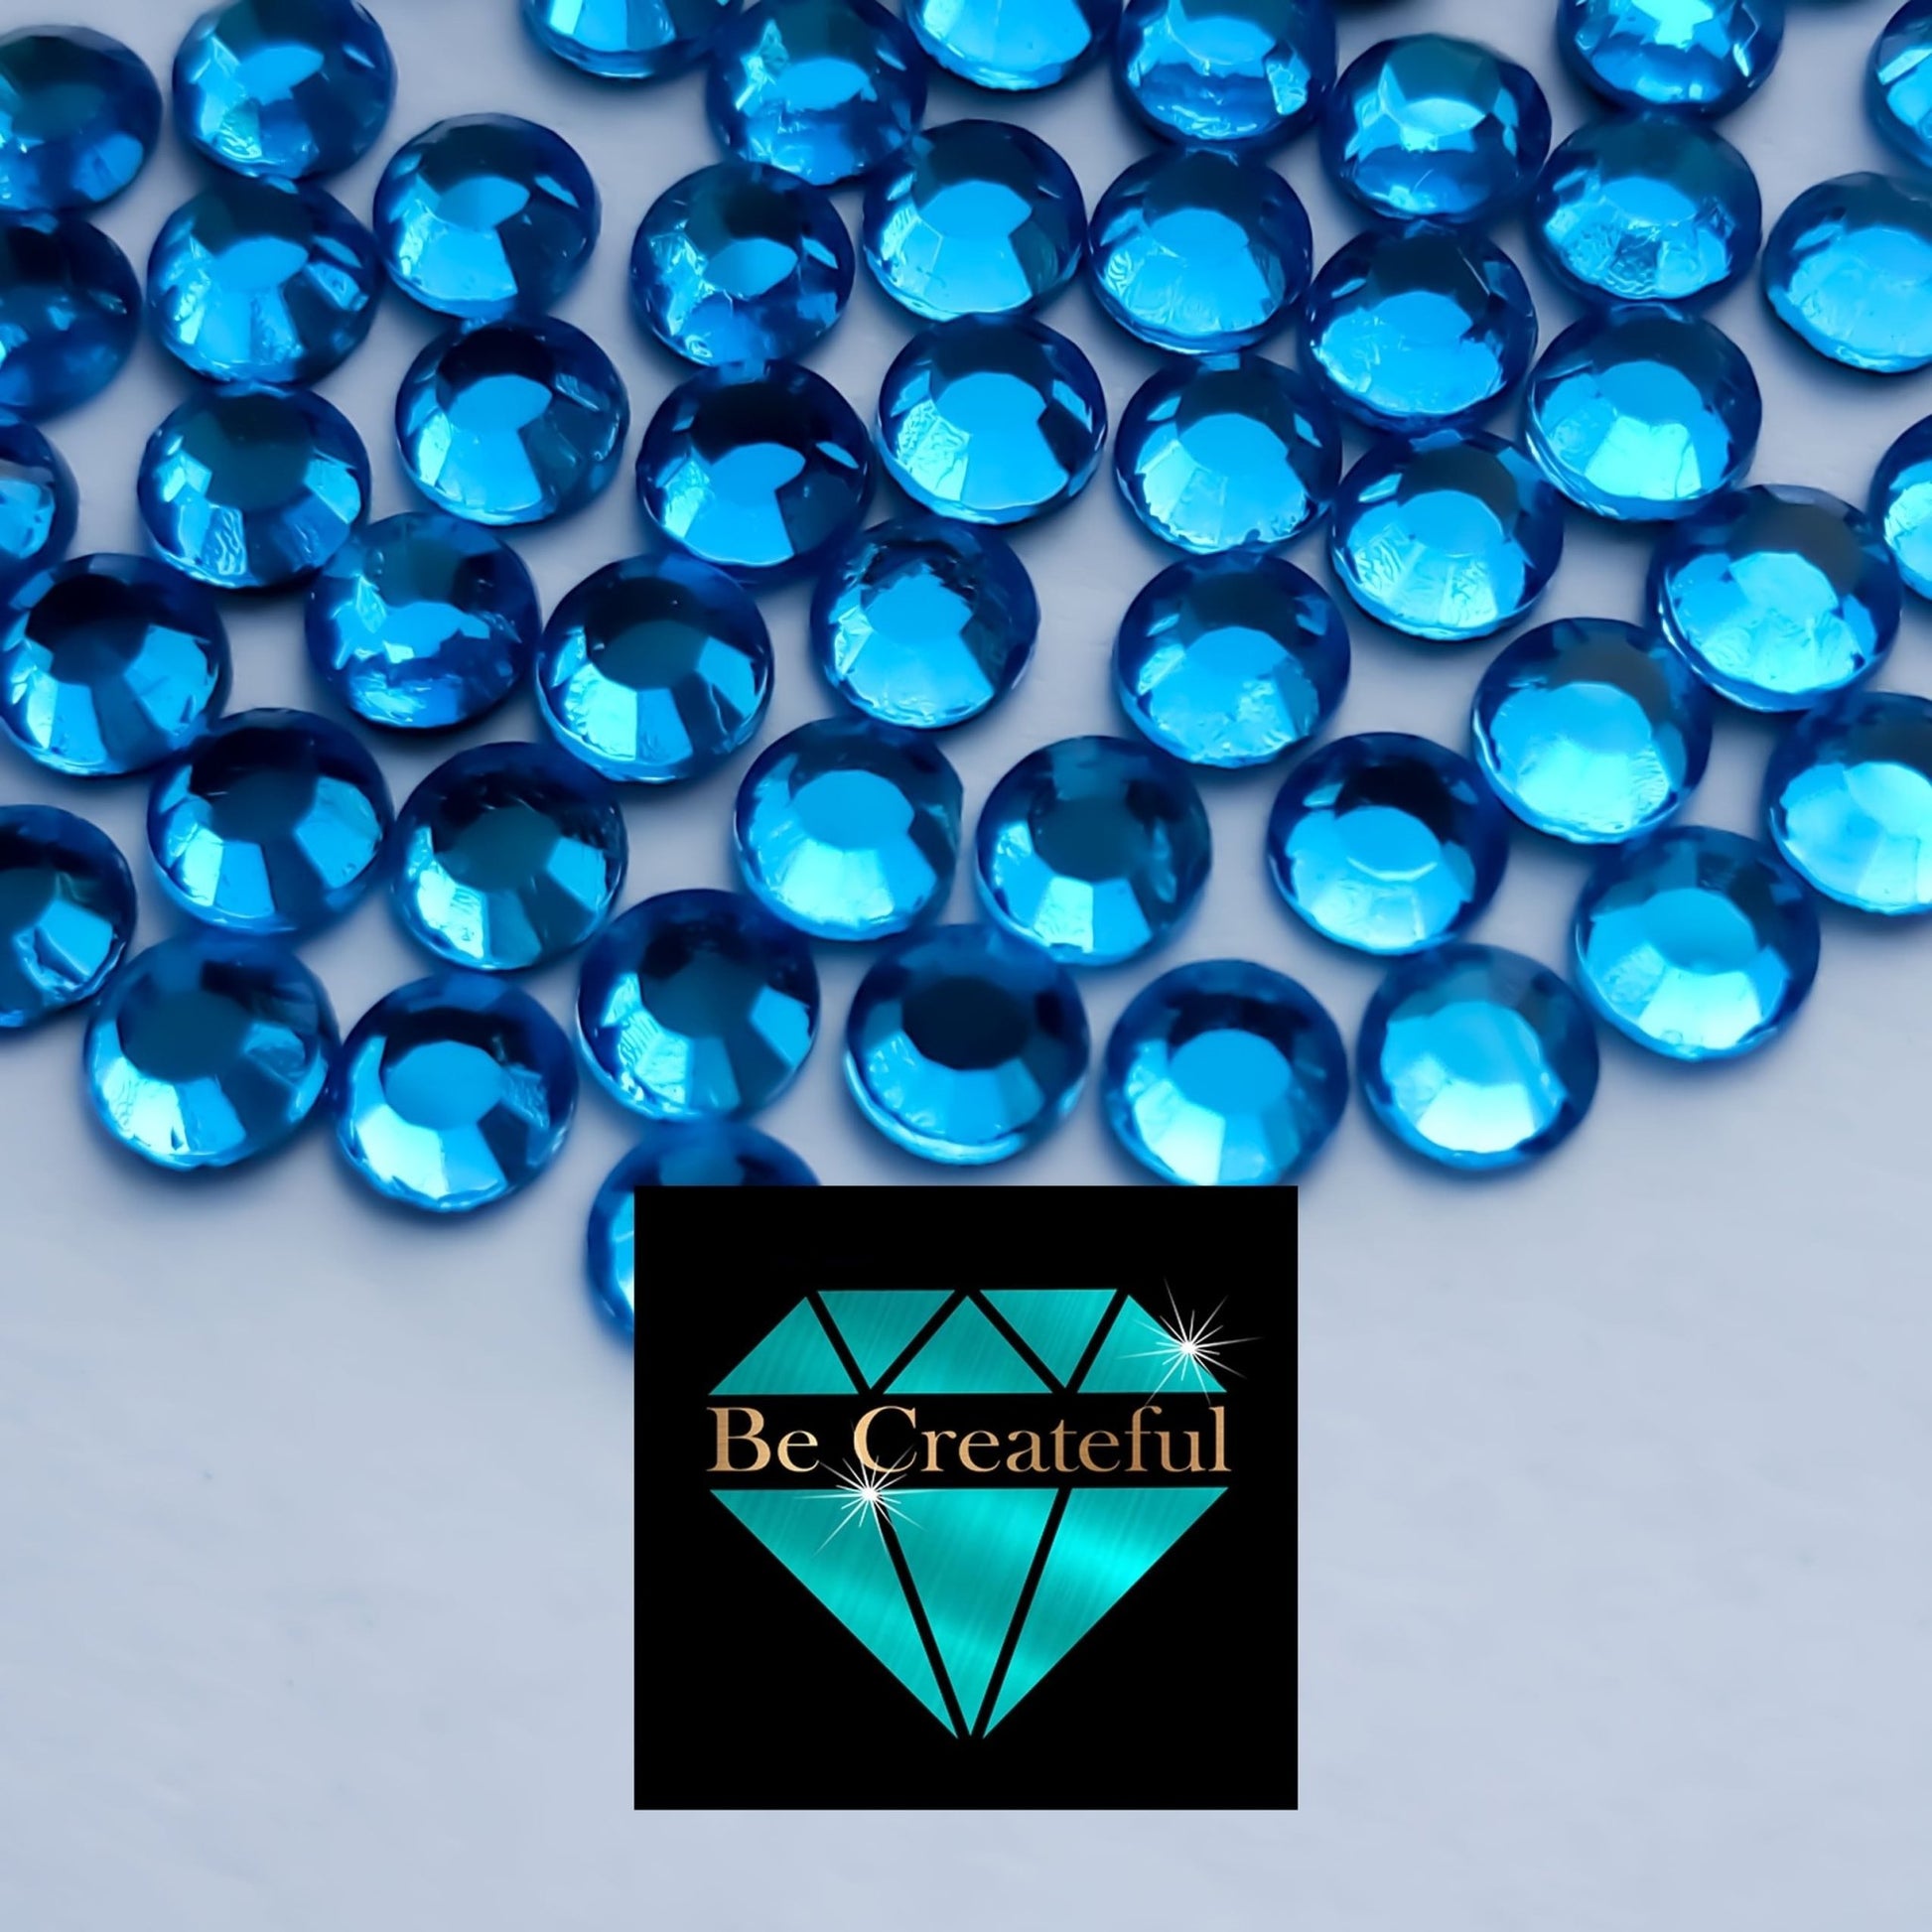 Korean Capri Blue Glass Hotfix Rhinestones - Be Createful, Beautiful Rhinestones at wholesale prices.